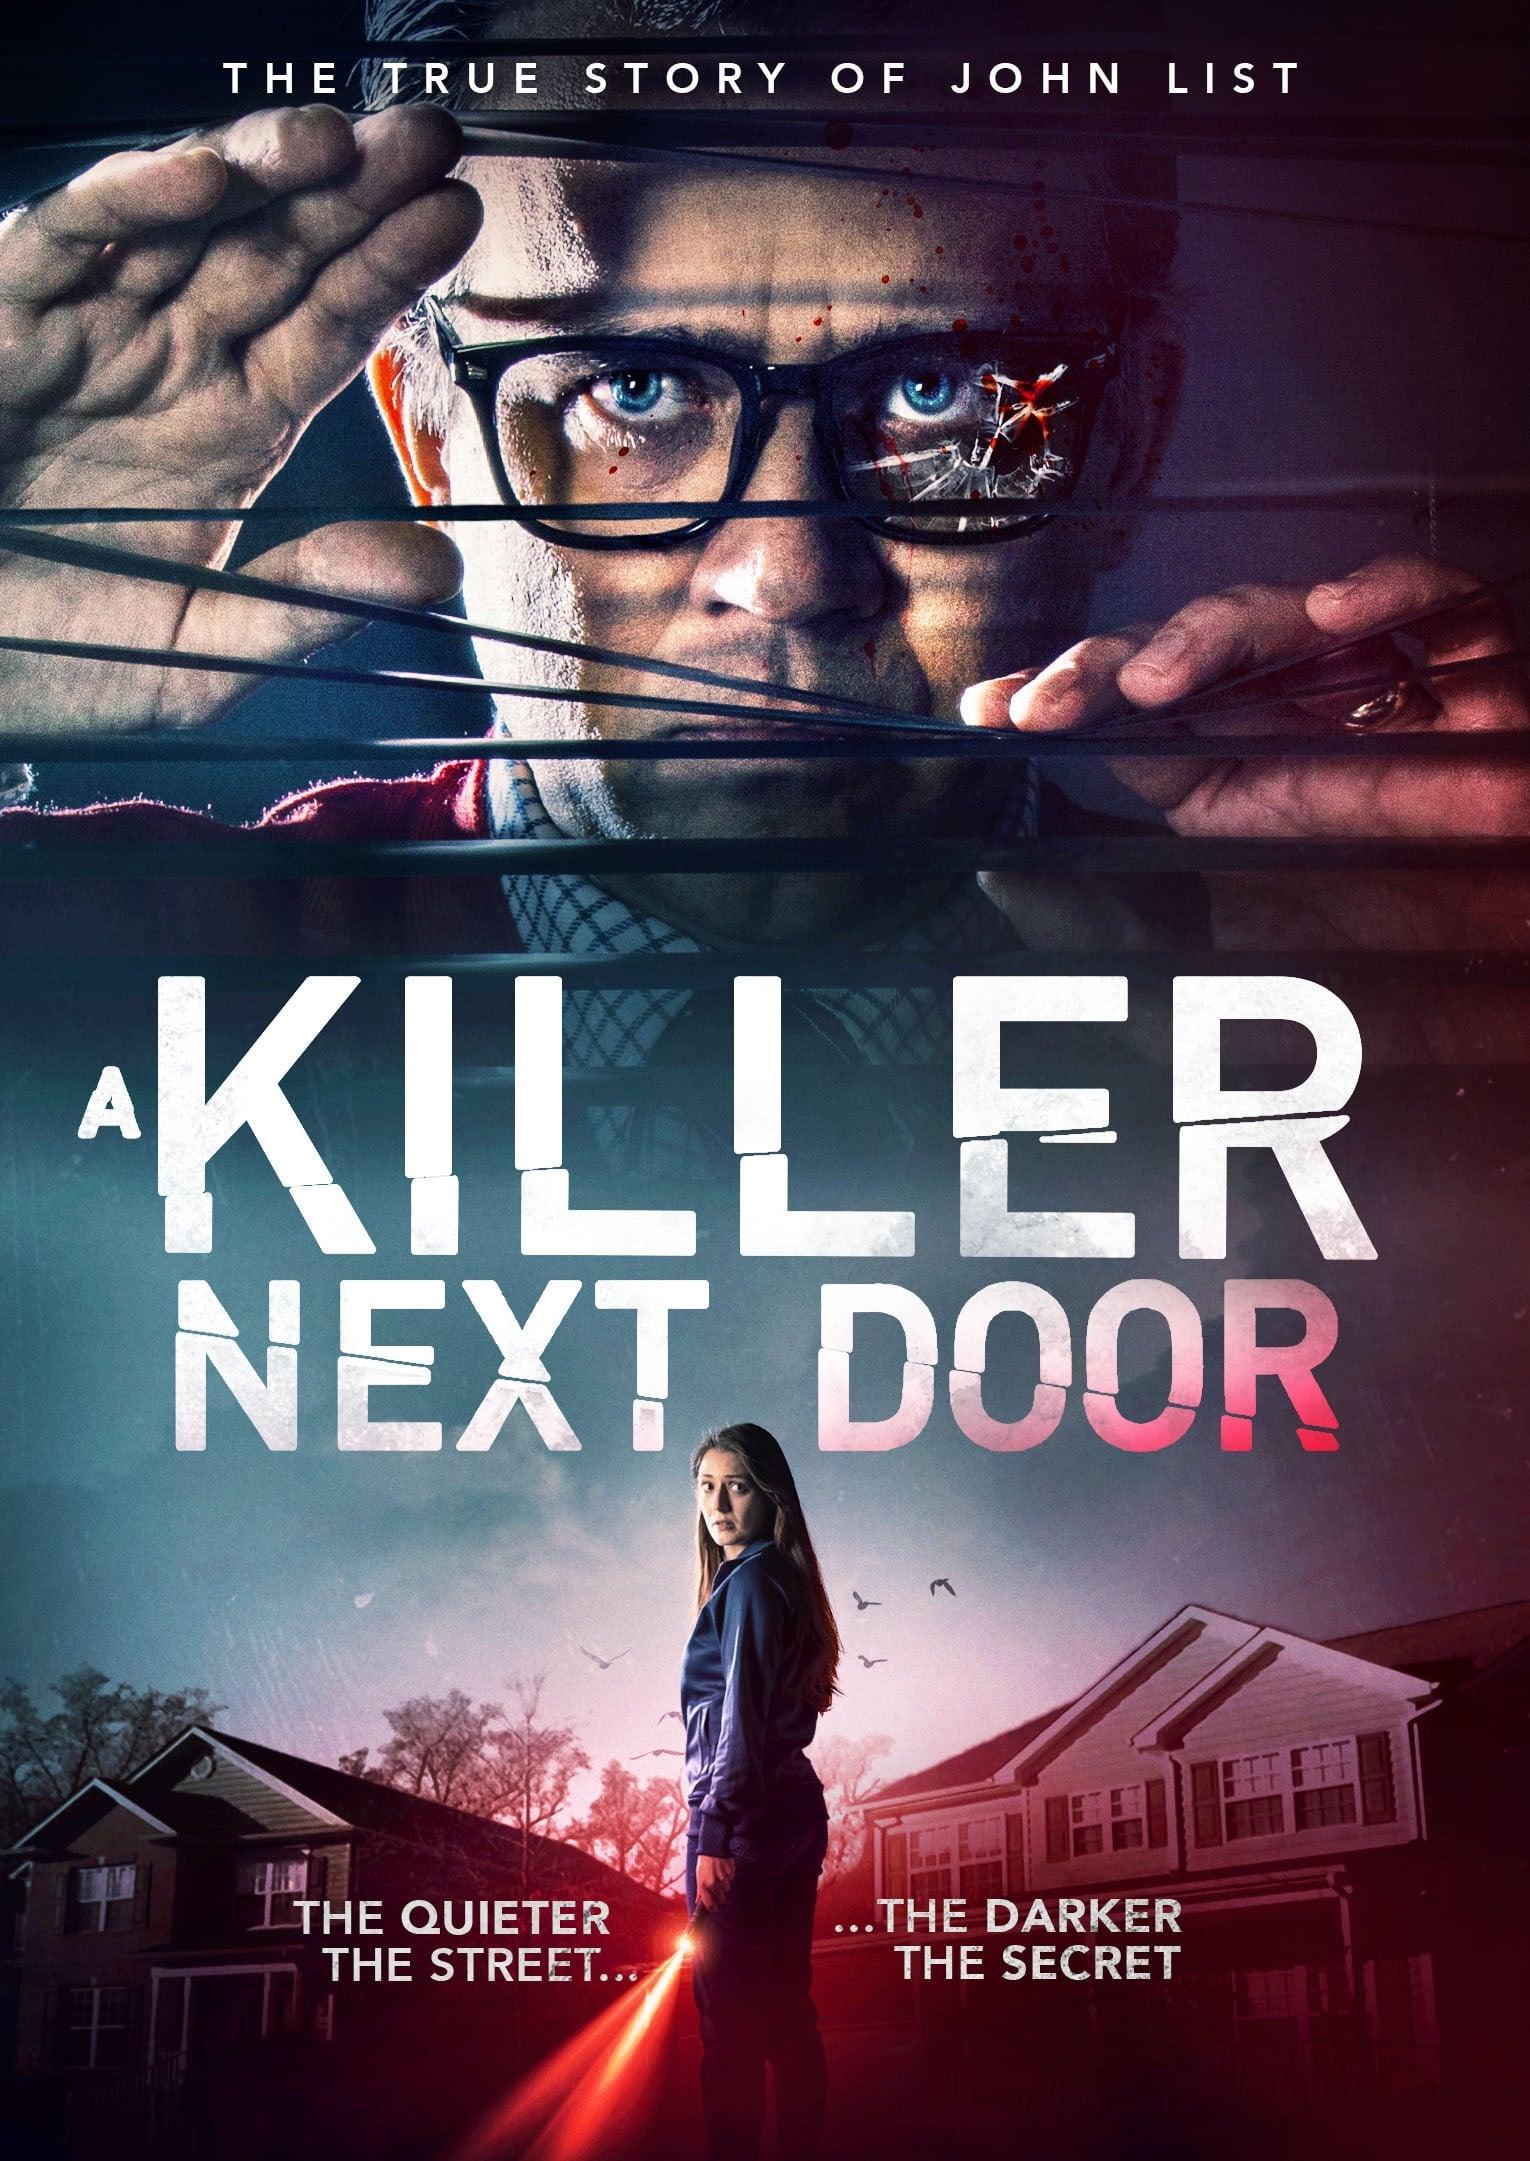 A Killer Next Door poster